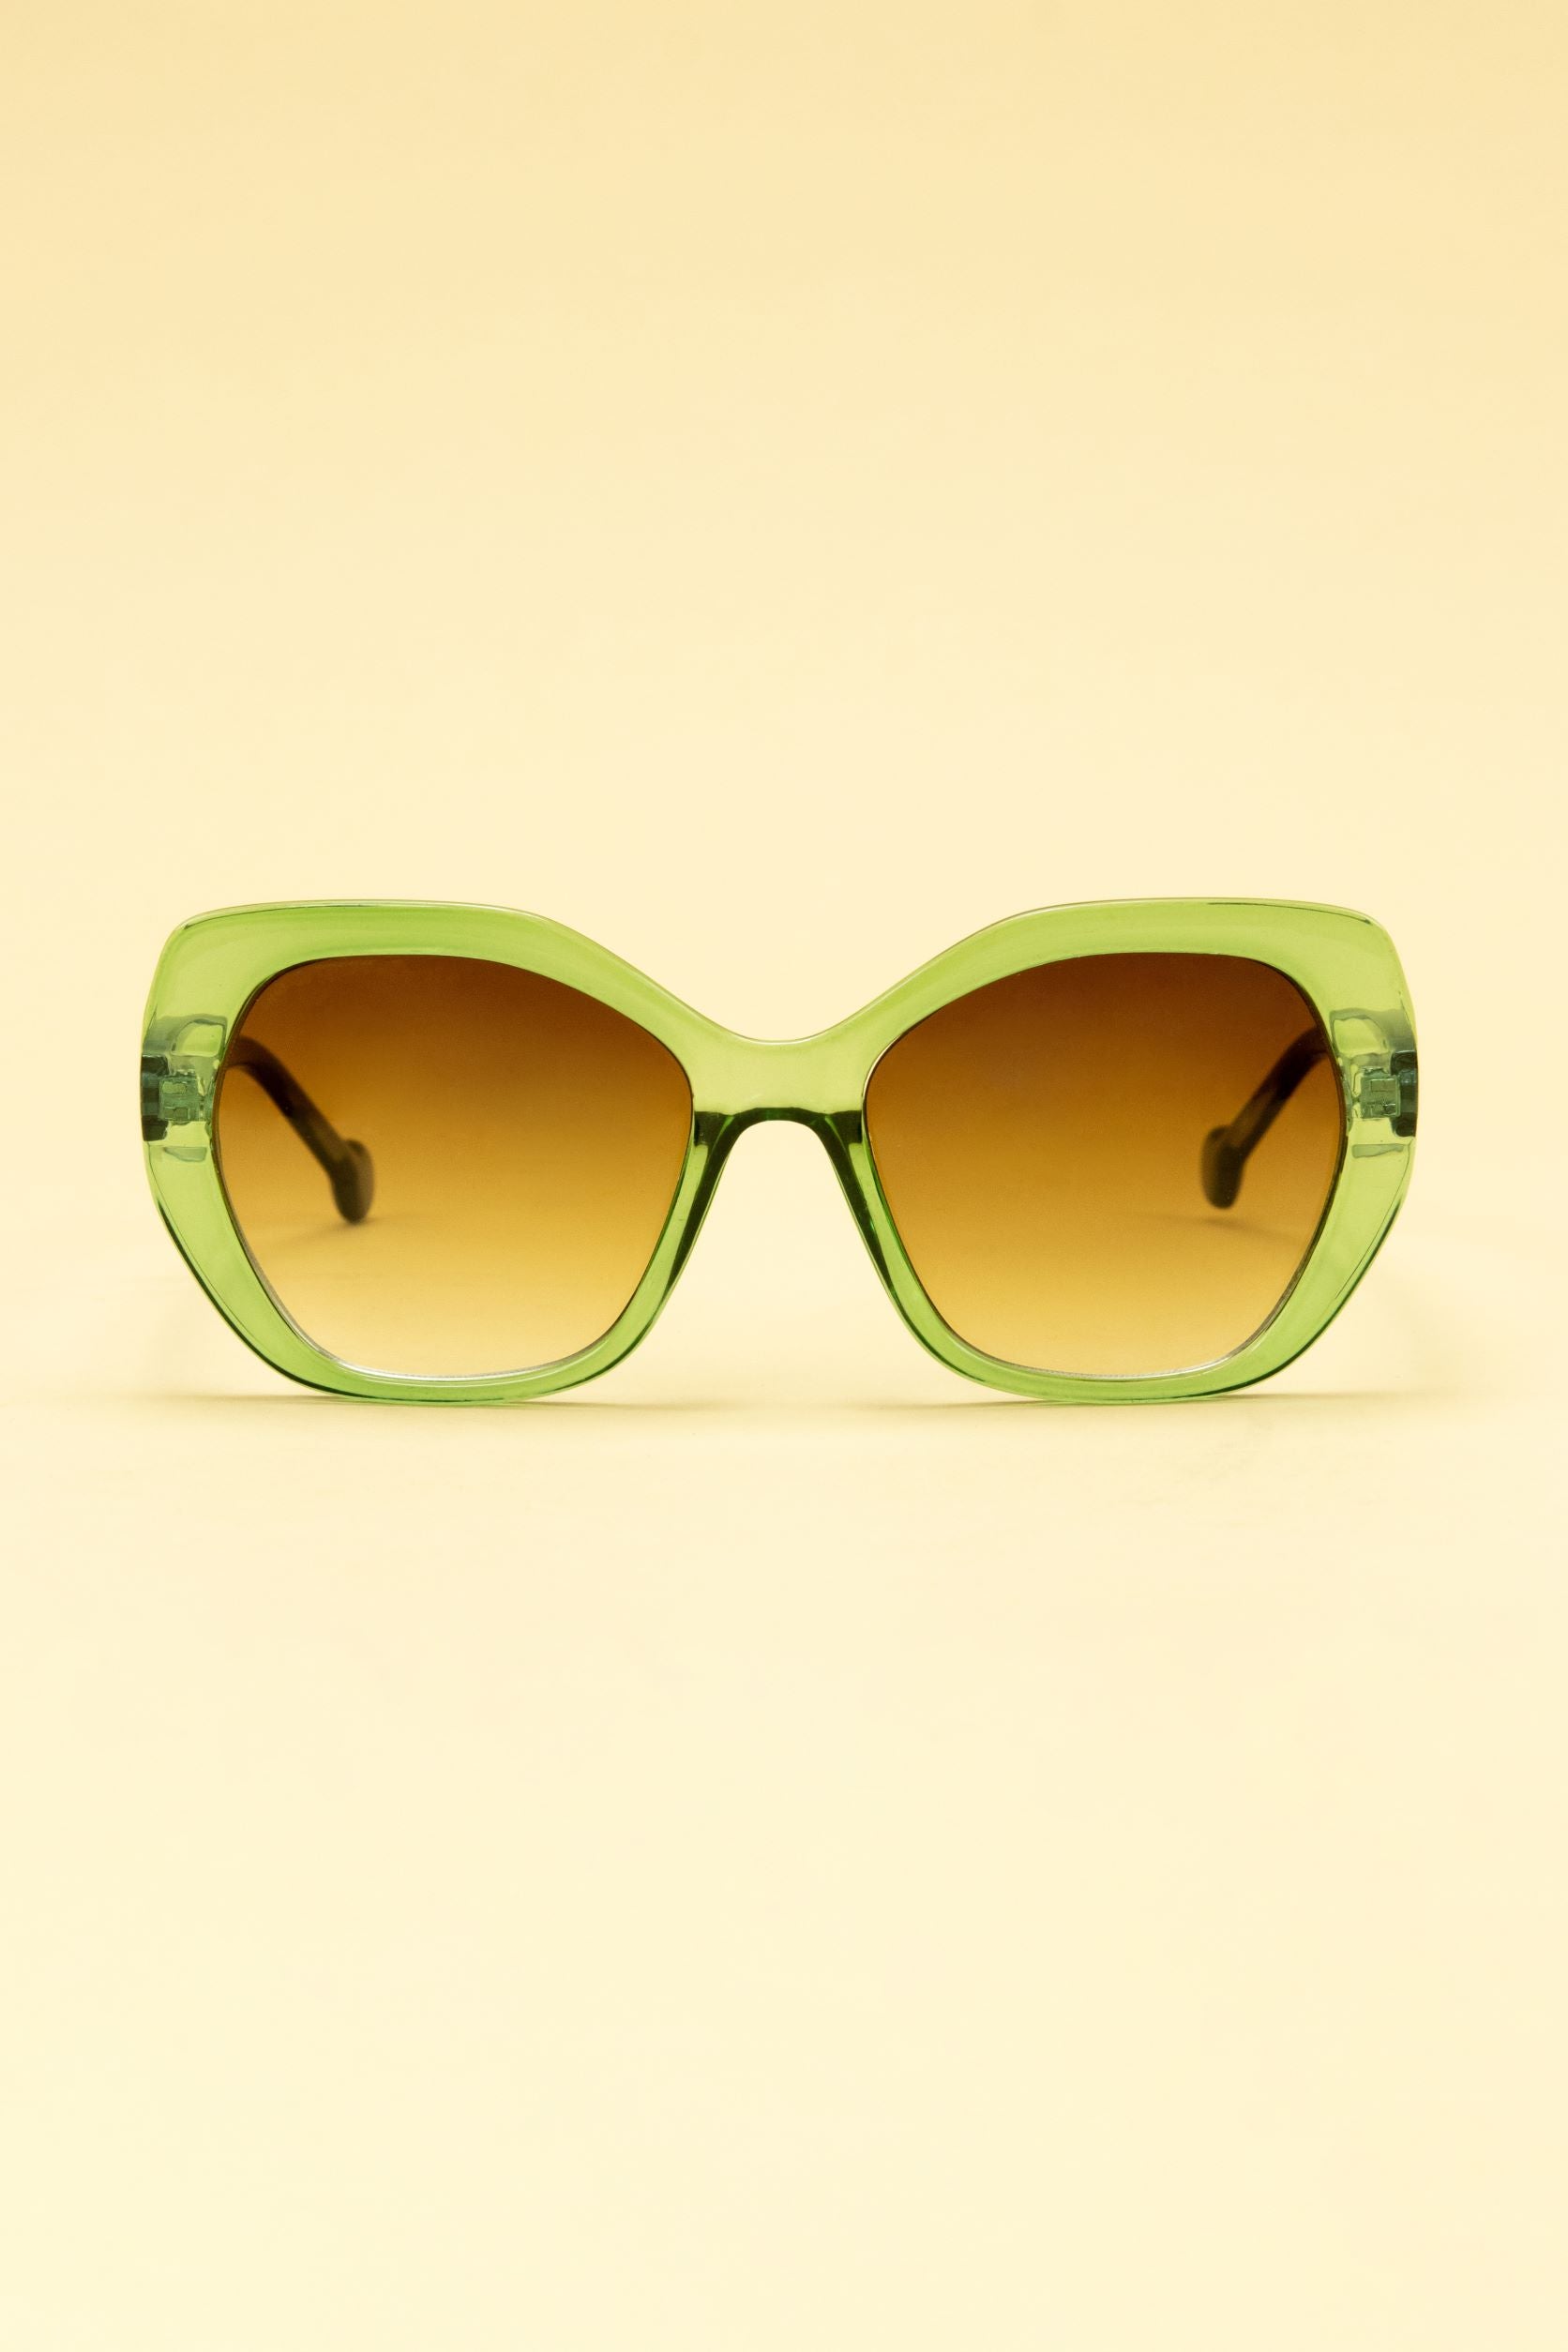 Powder Brianna Limited Edition Sunglasses Ocean Green - BouChic 